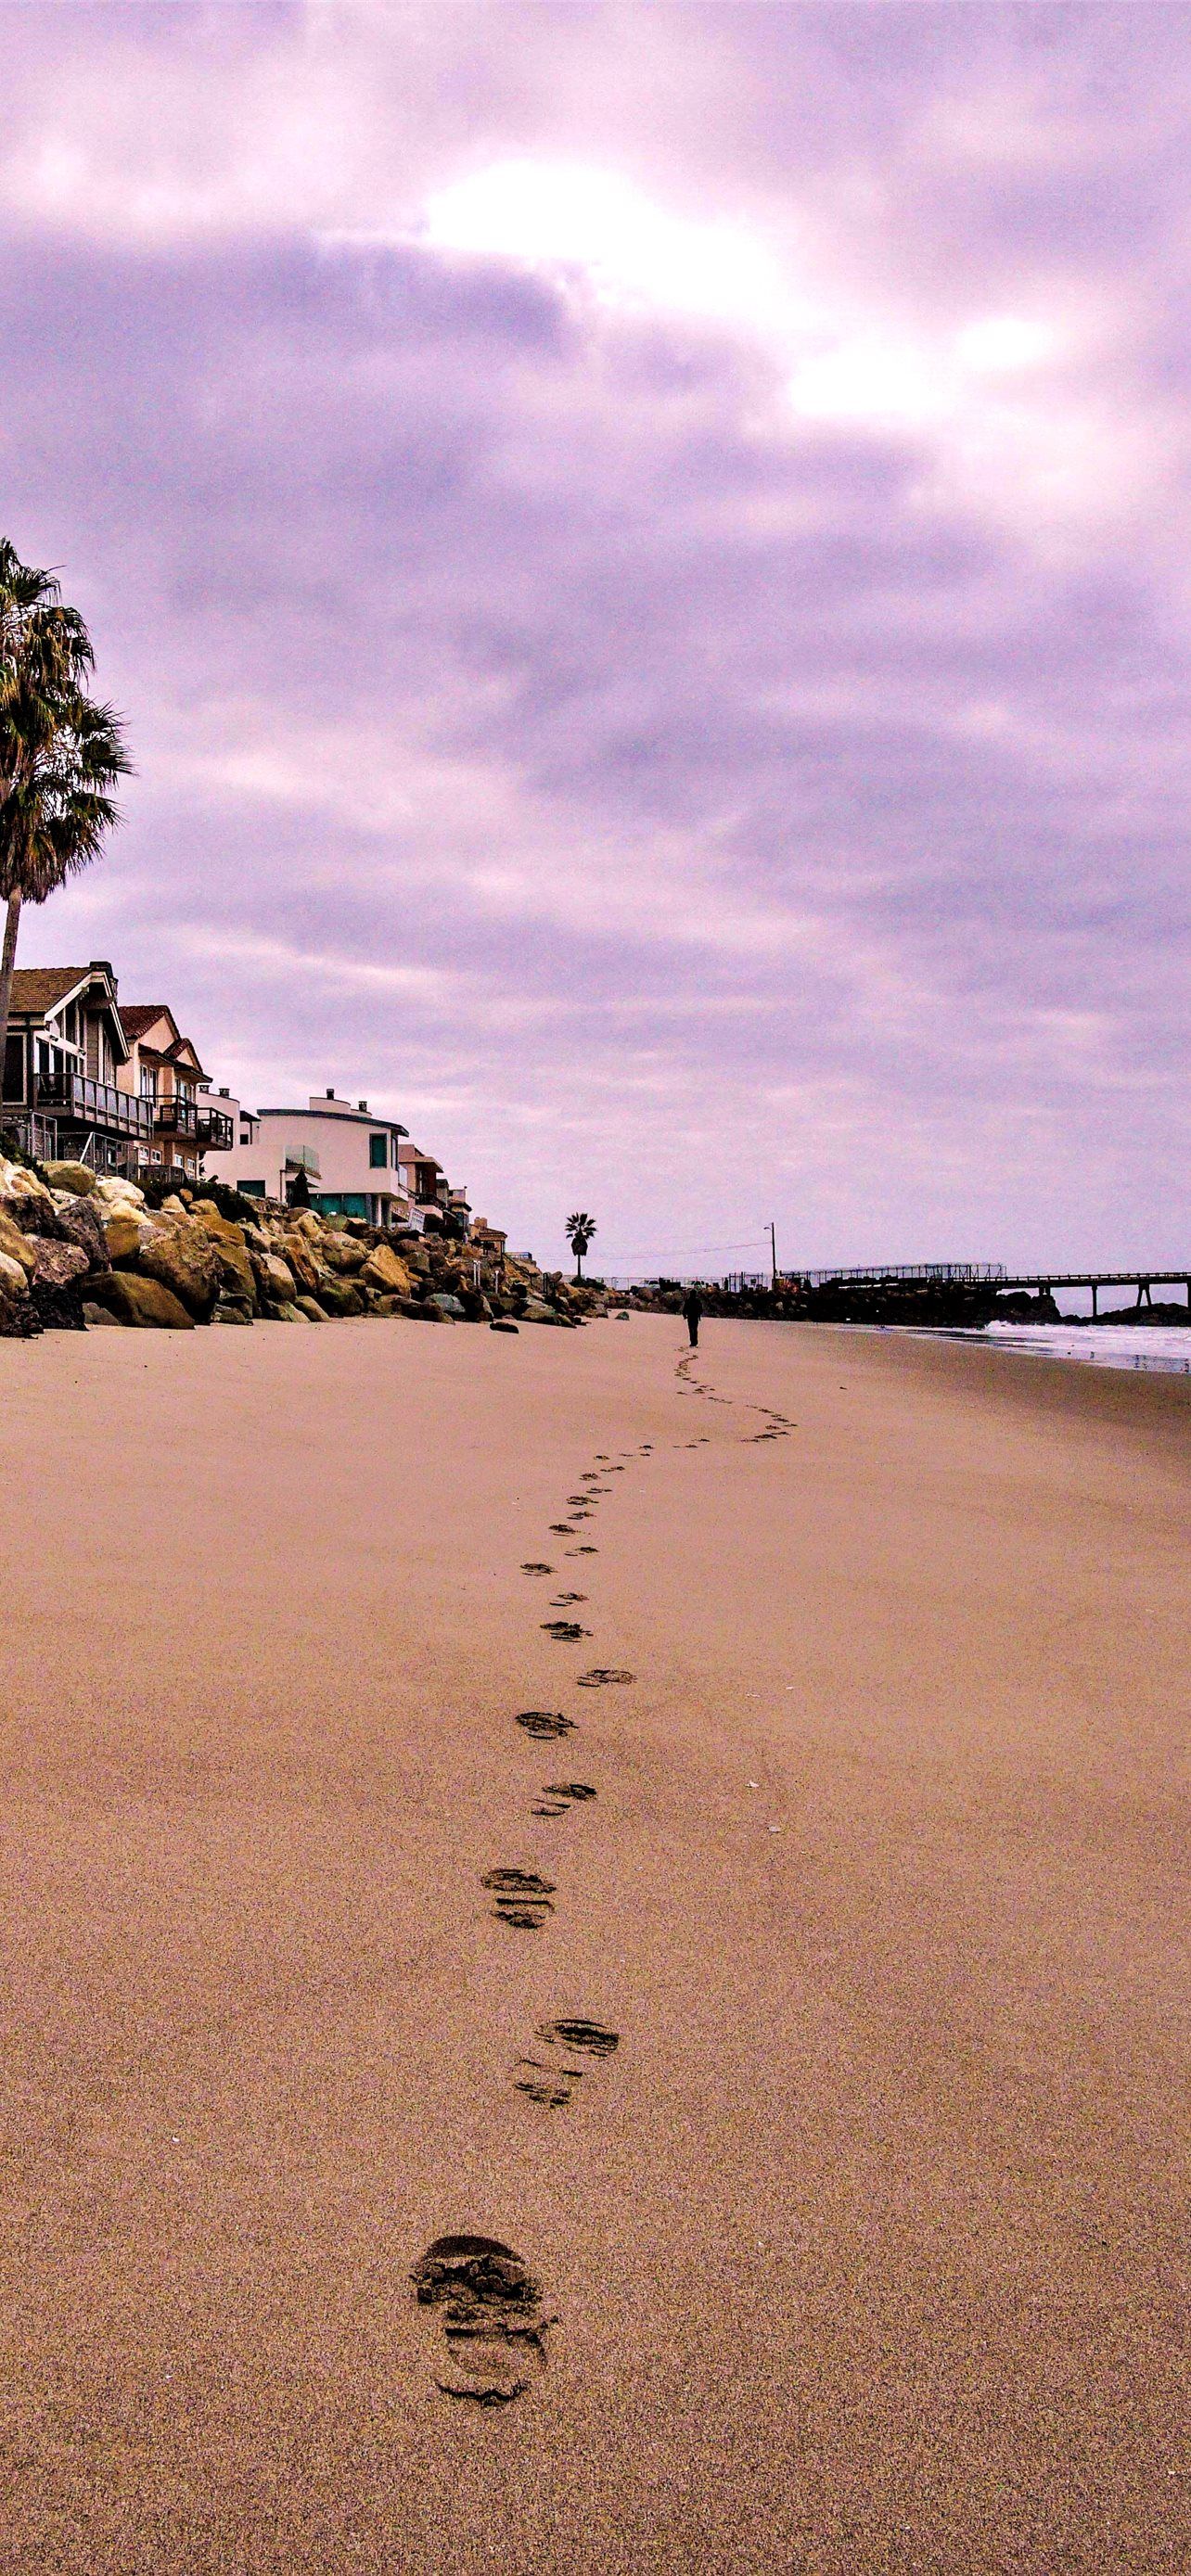 A beach with footprints in the sand - Beach